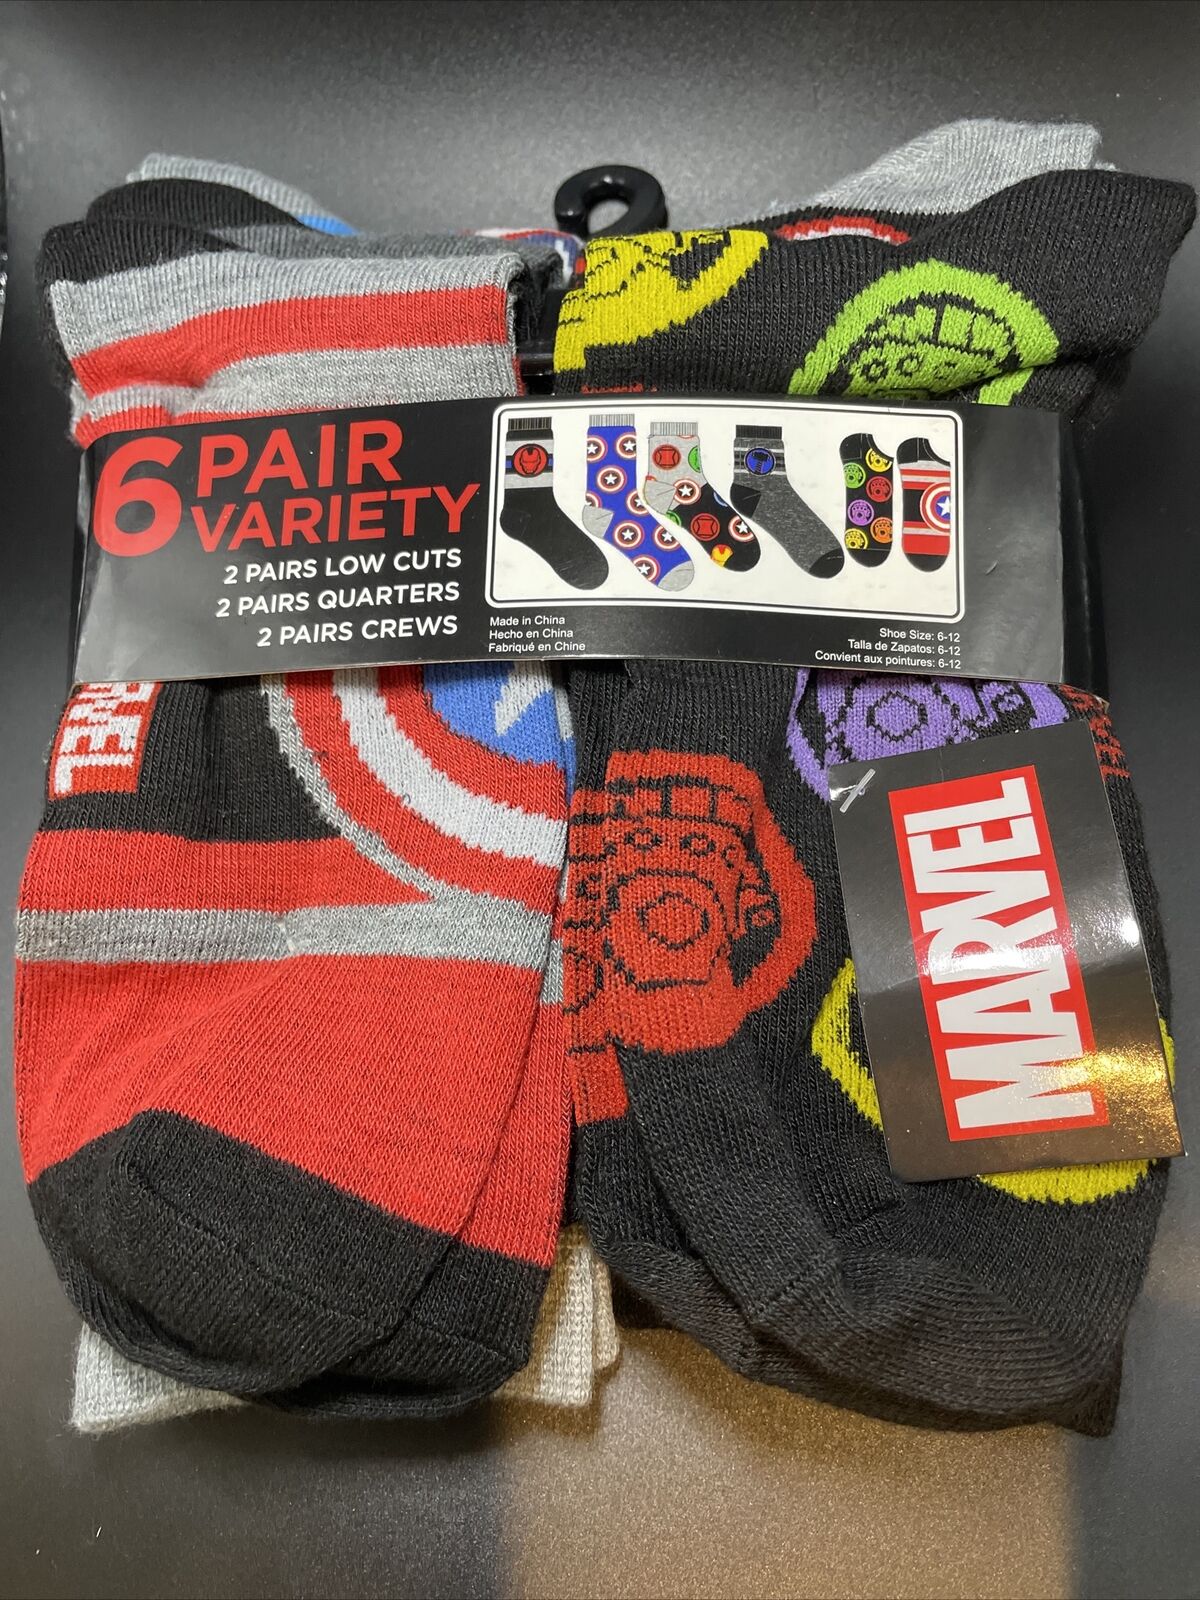 Marvel 6pair Variety Mens Socks Size 6-12 – The Odd Assortment